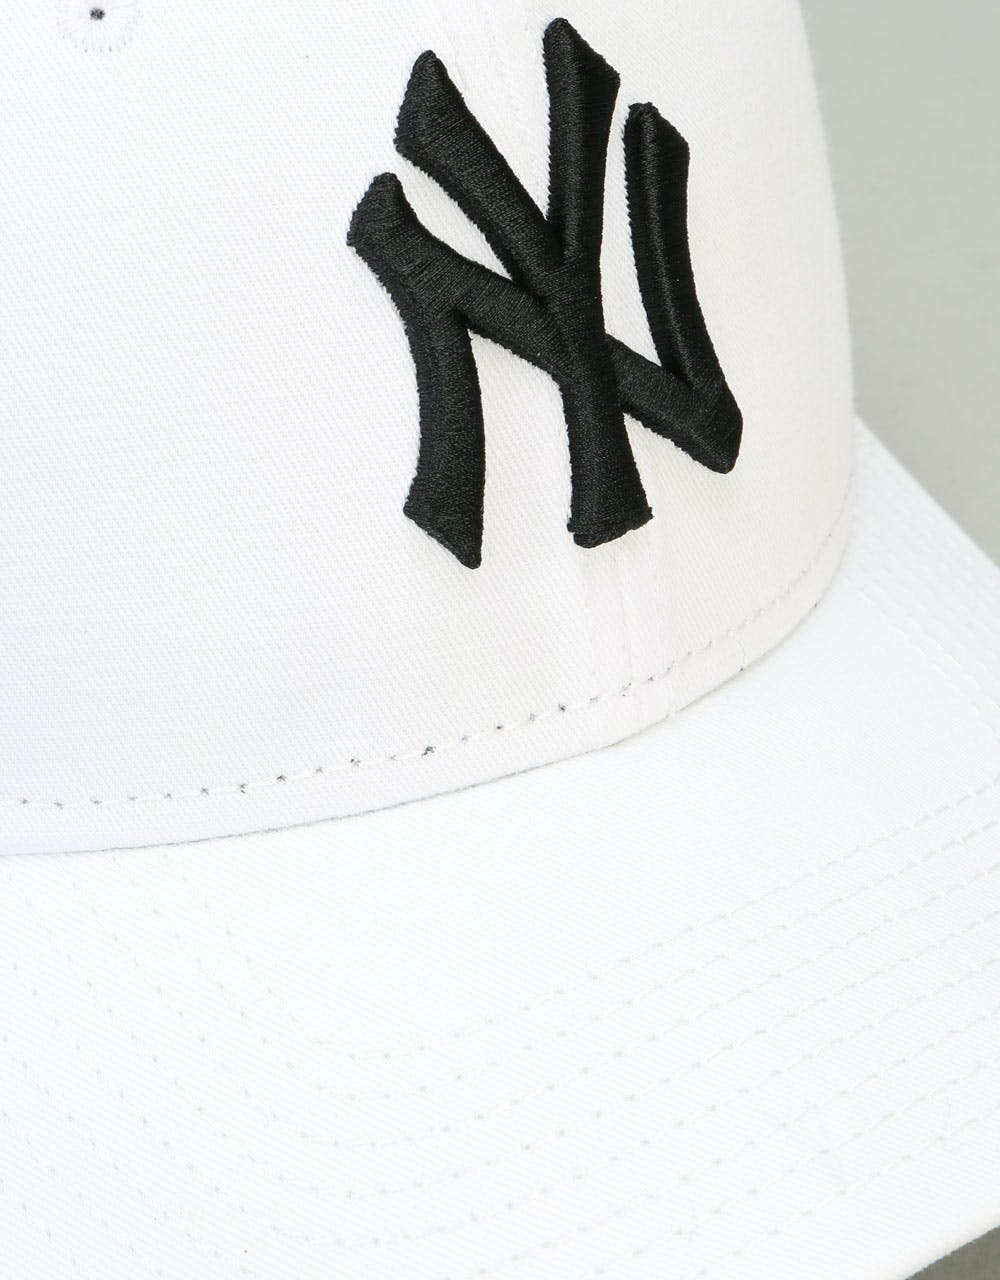 New Era 9Forty MLB New York Yankees Cap - White/Black